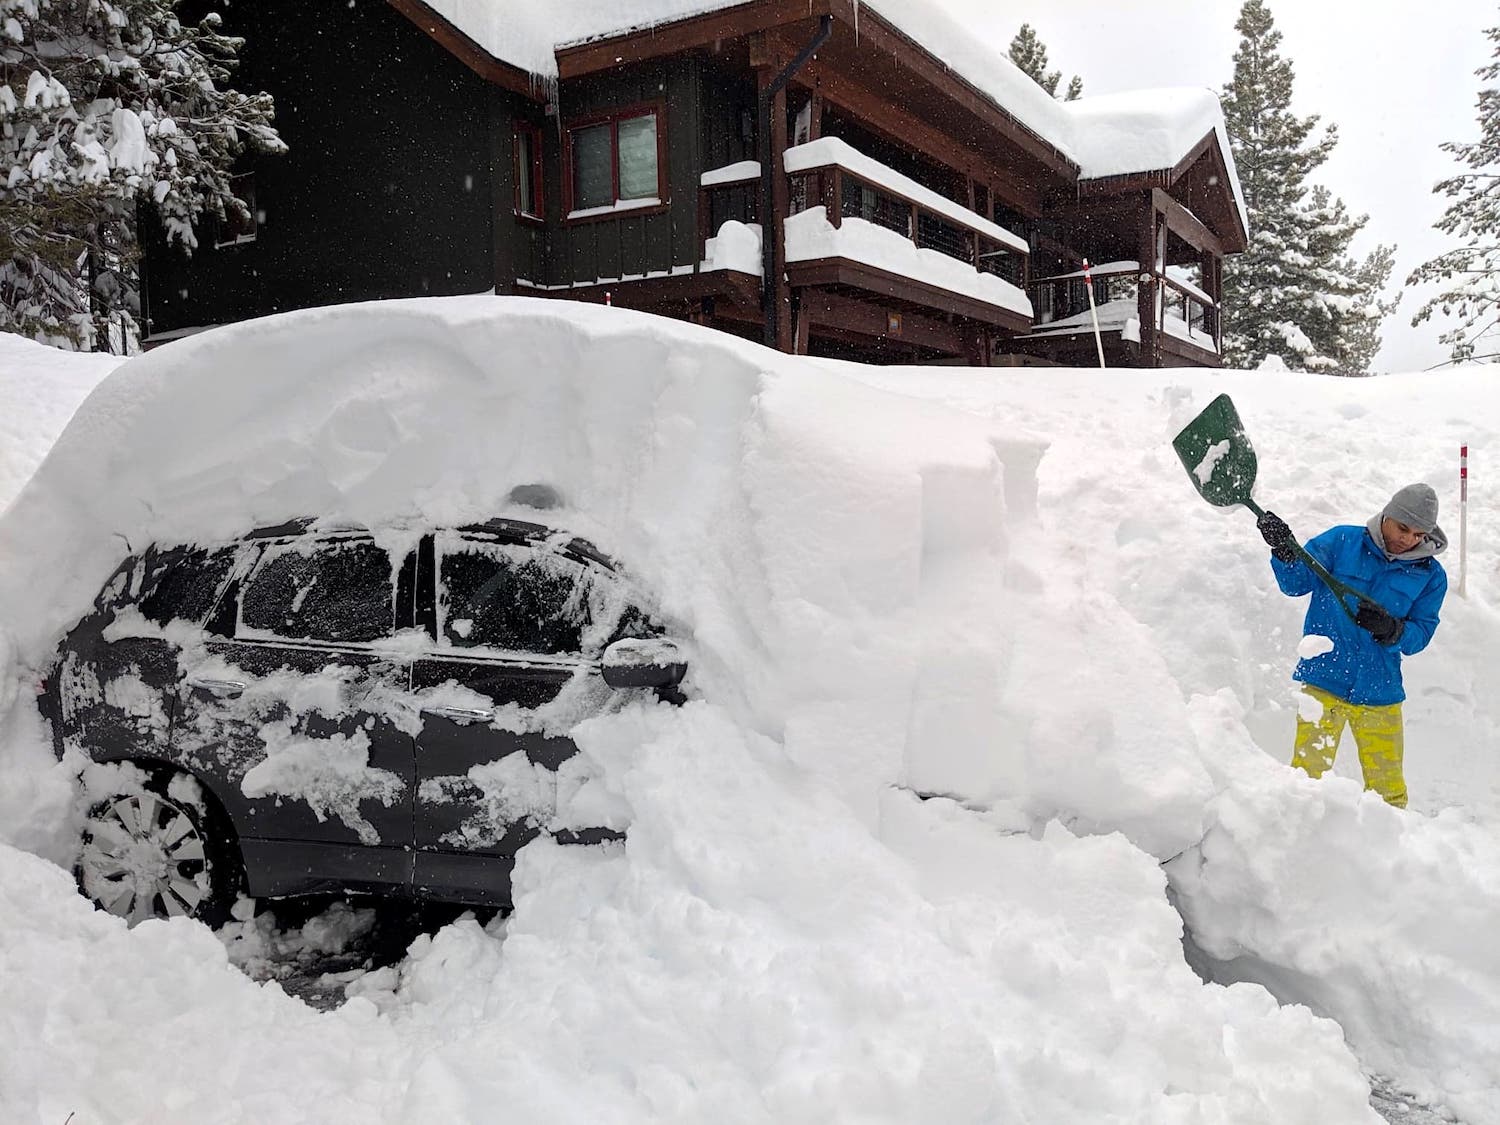 Lake Tahoe, CA Just Saw 114" of Snow in 3Days... SnowBrains